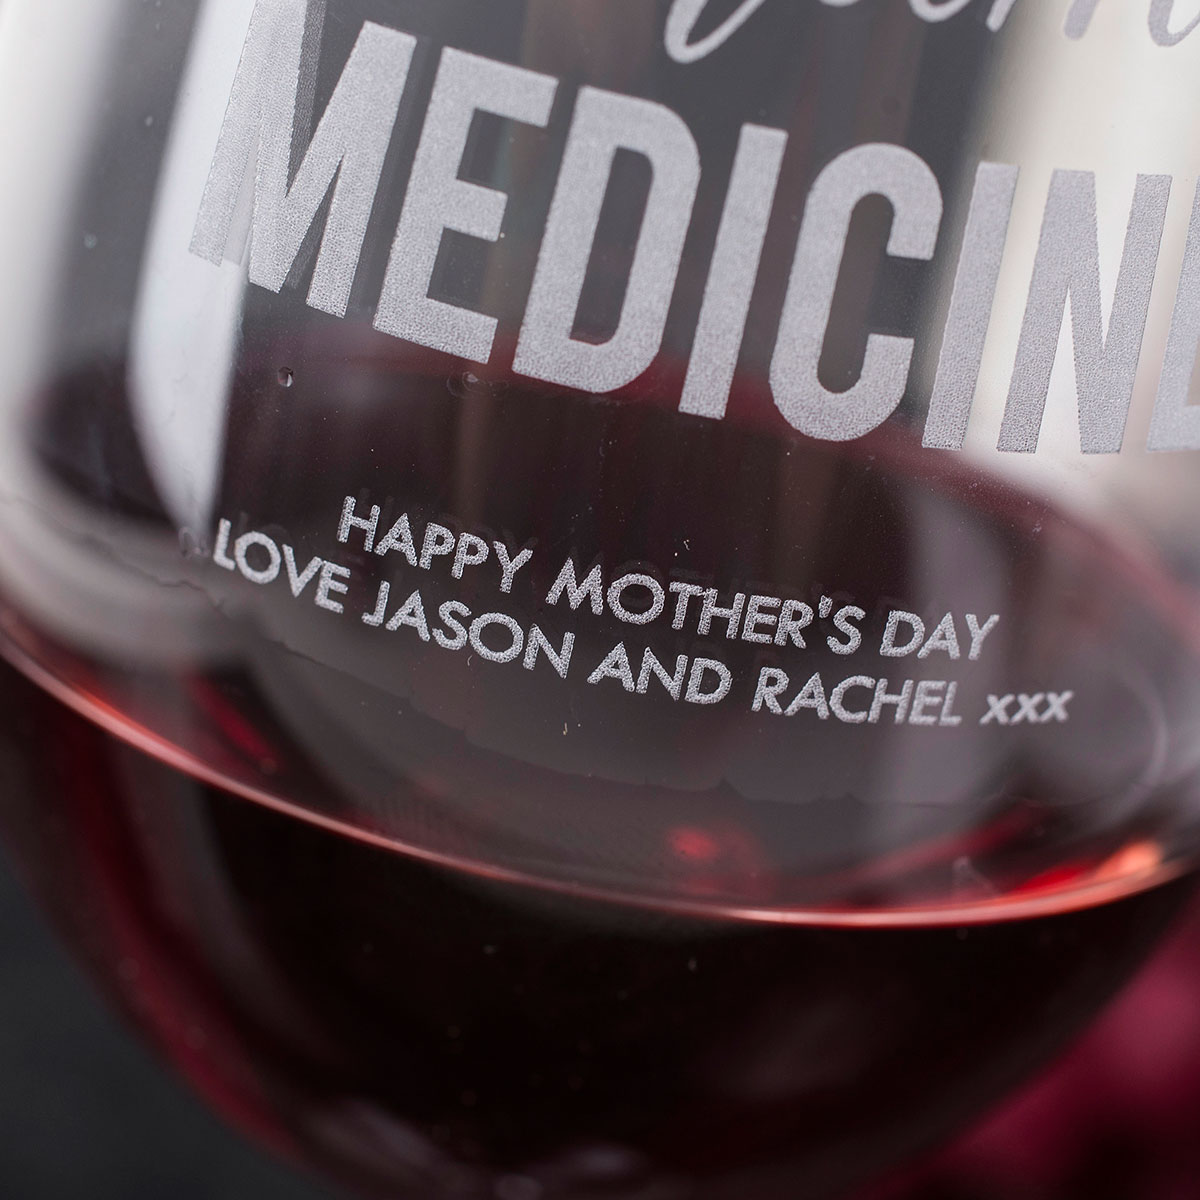 Personalised Wine Glass - Mum's Medicine